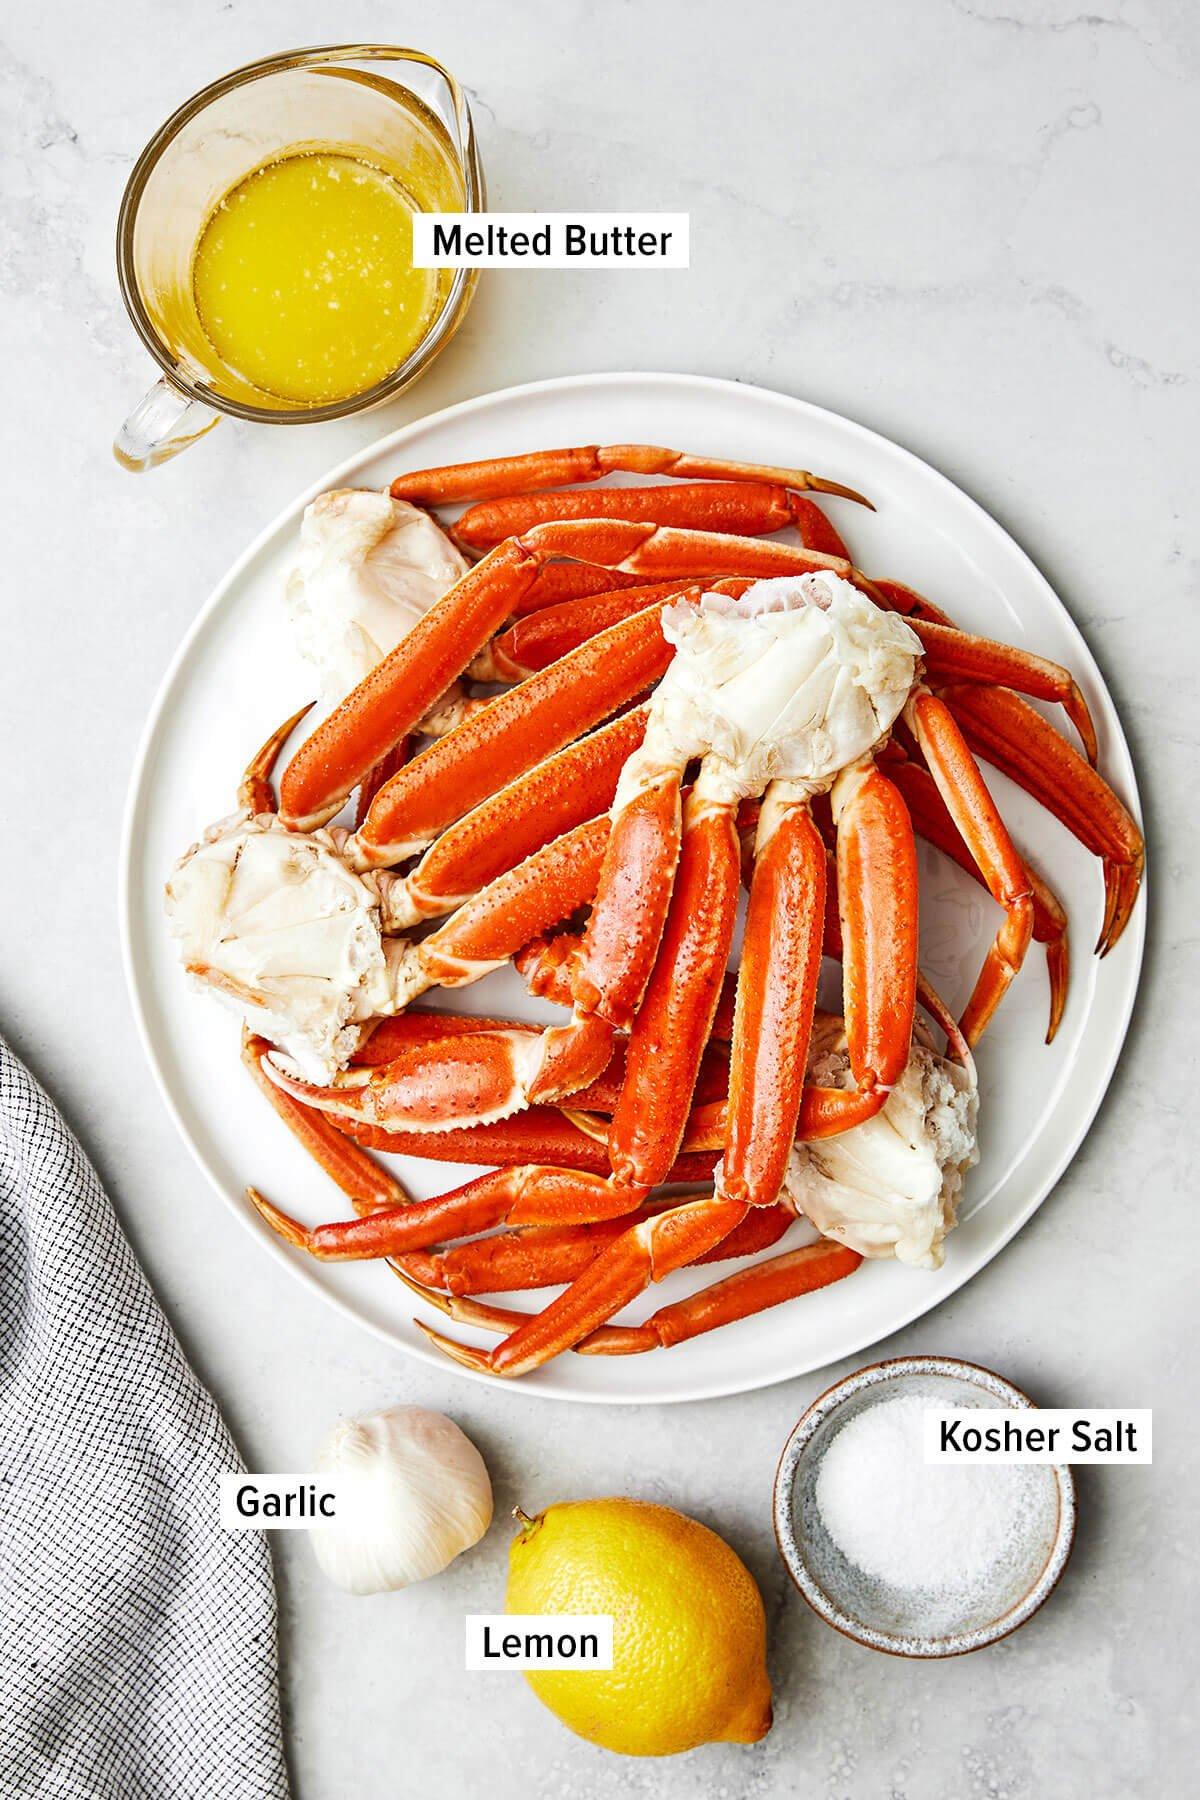 Ingredients for eating crab legs